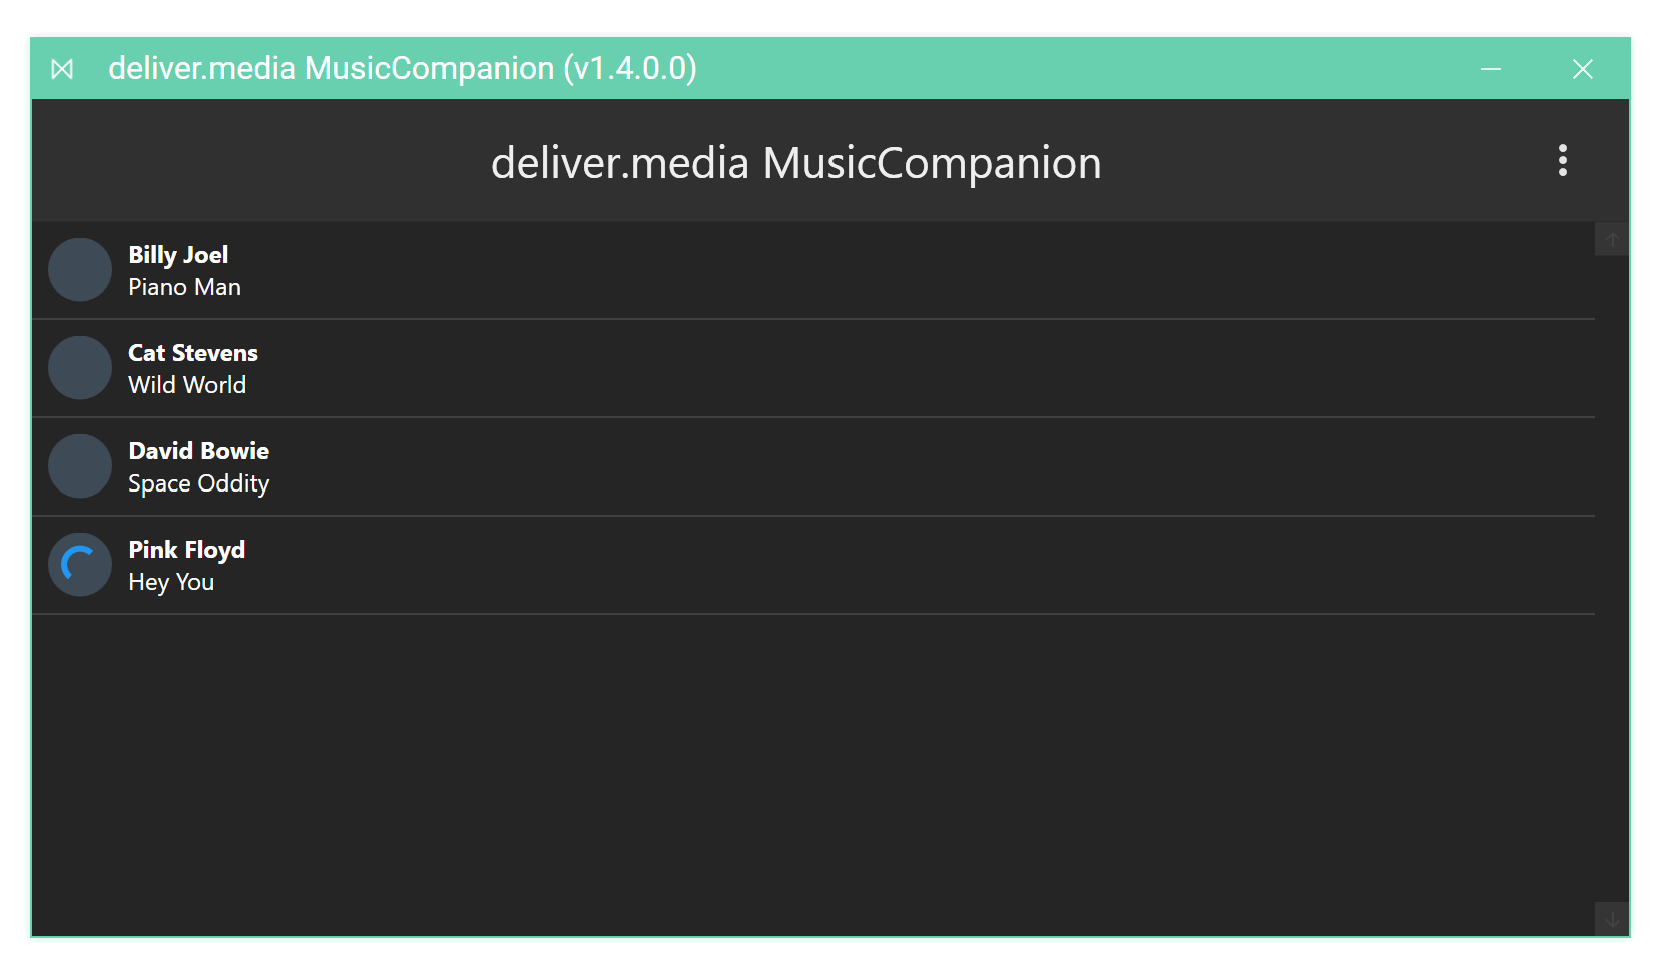 deliver.media MusicCompanion pending data from the deliver.media MusicSearch portal